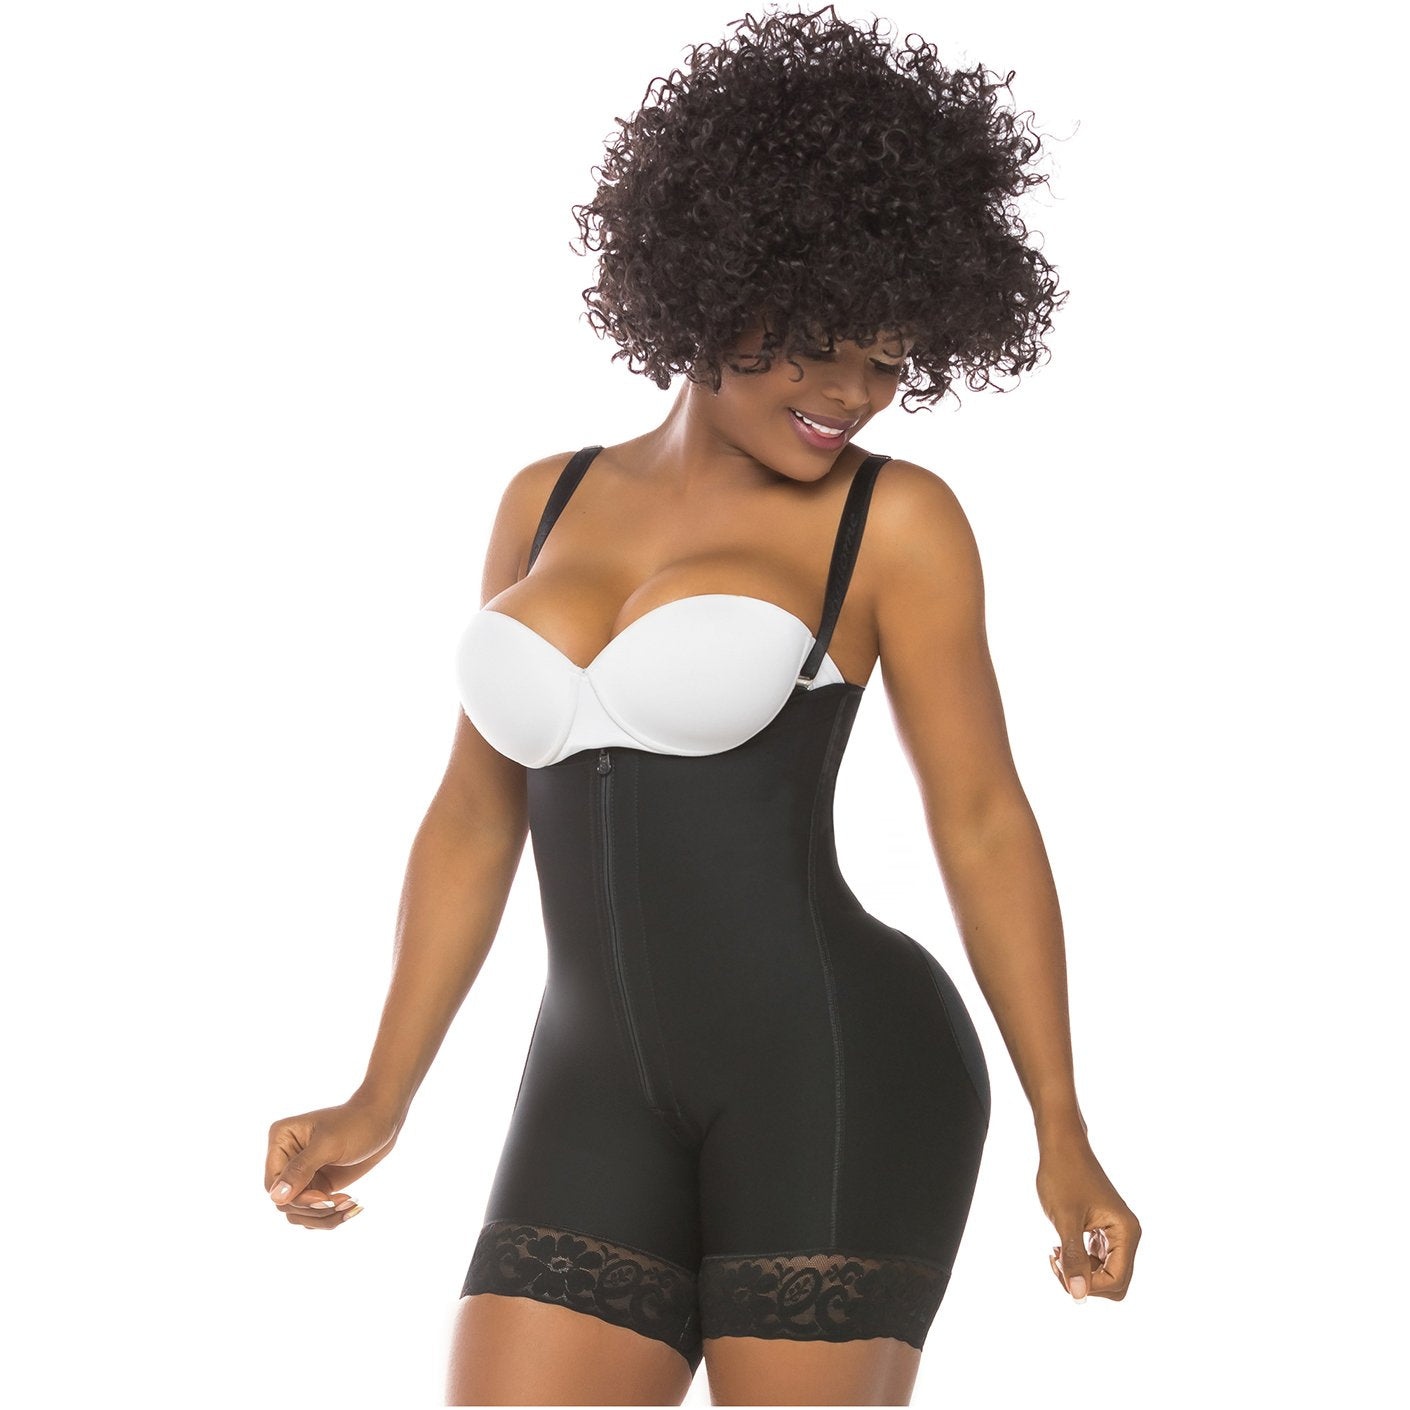 Sonryse Shapewear: 066BF - Women's Slimming Braless Body Shaper - Showmee  Store